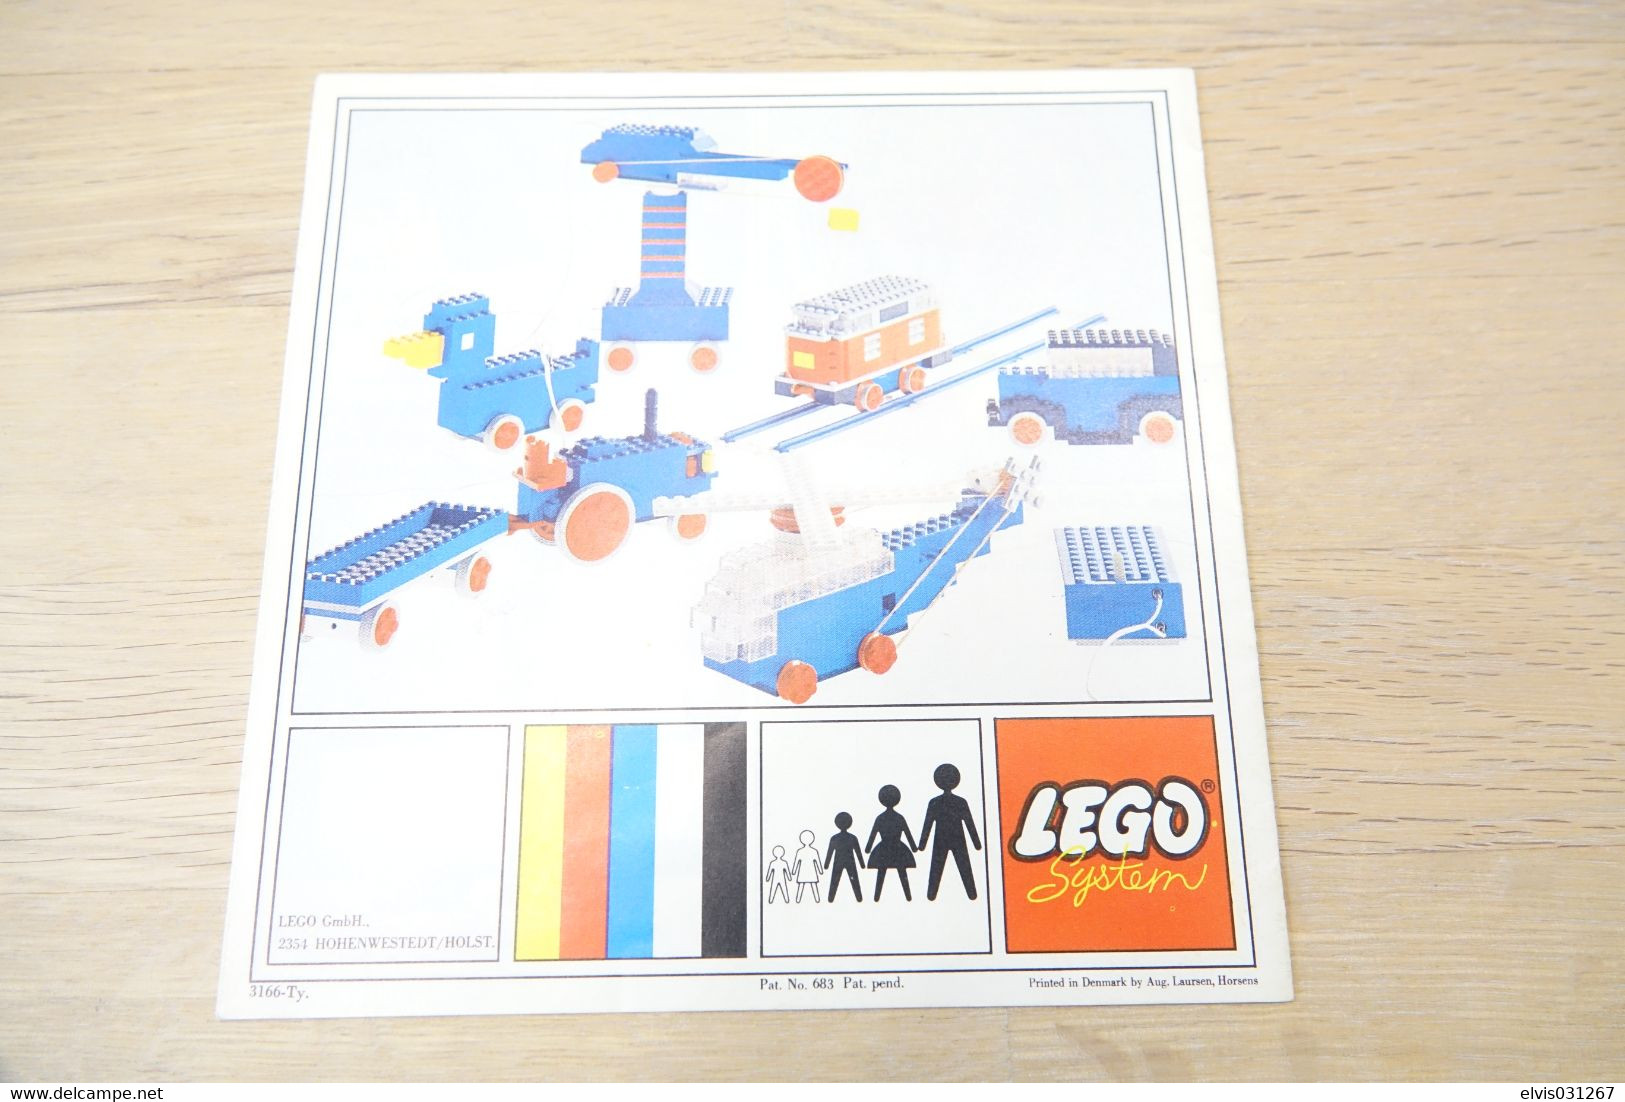 LEGO - Information Book 1966 Mit Dem Lego-Motor Bauen (3166-Ty) - Original Vintage Lego - 1966 - Catálogos